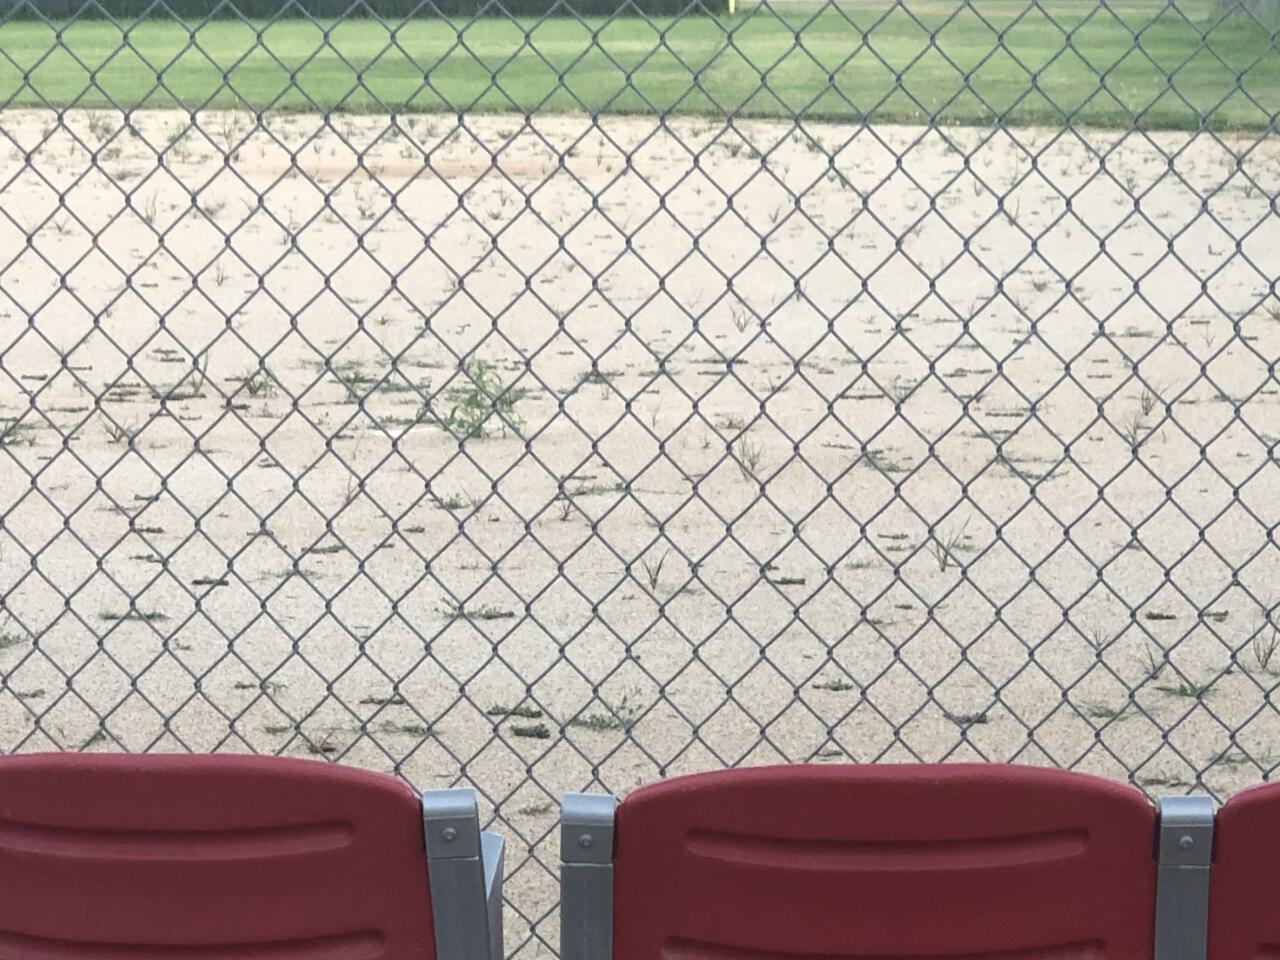 Chatsworth High School's varsity softball field.